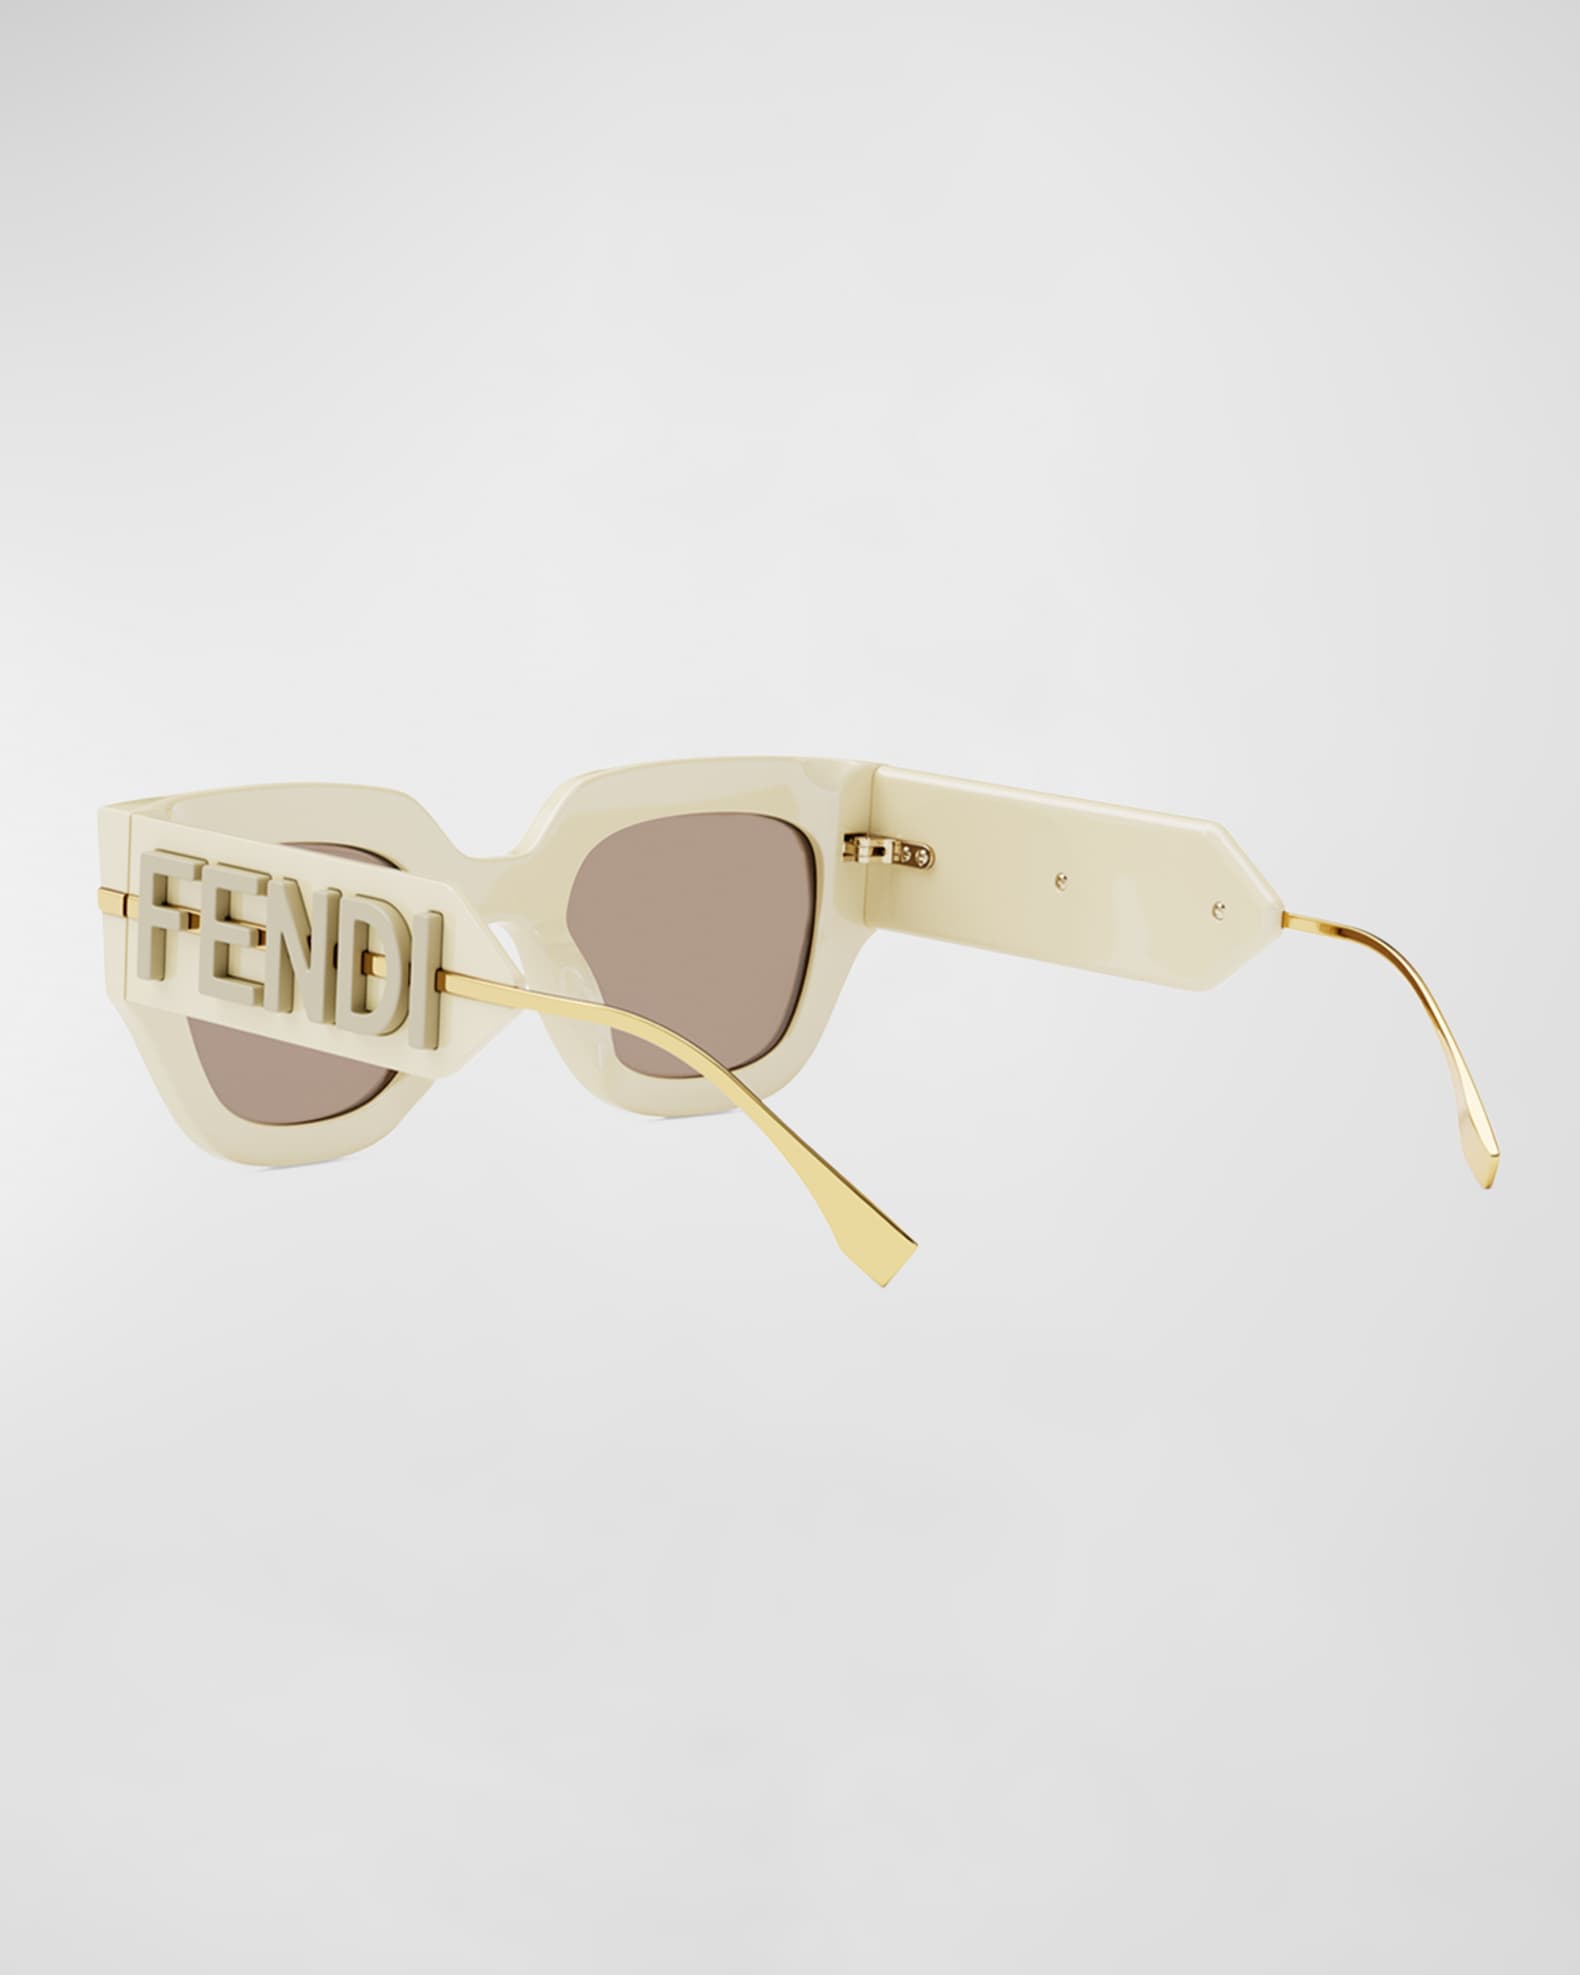 Fendi Fine Cat Eye Sunglasses in Multicoloured - Fendi